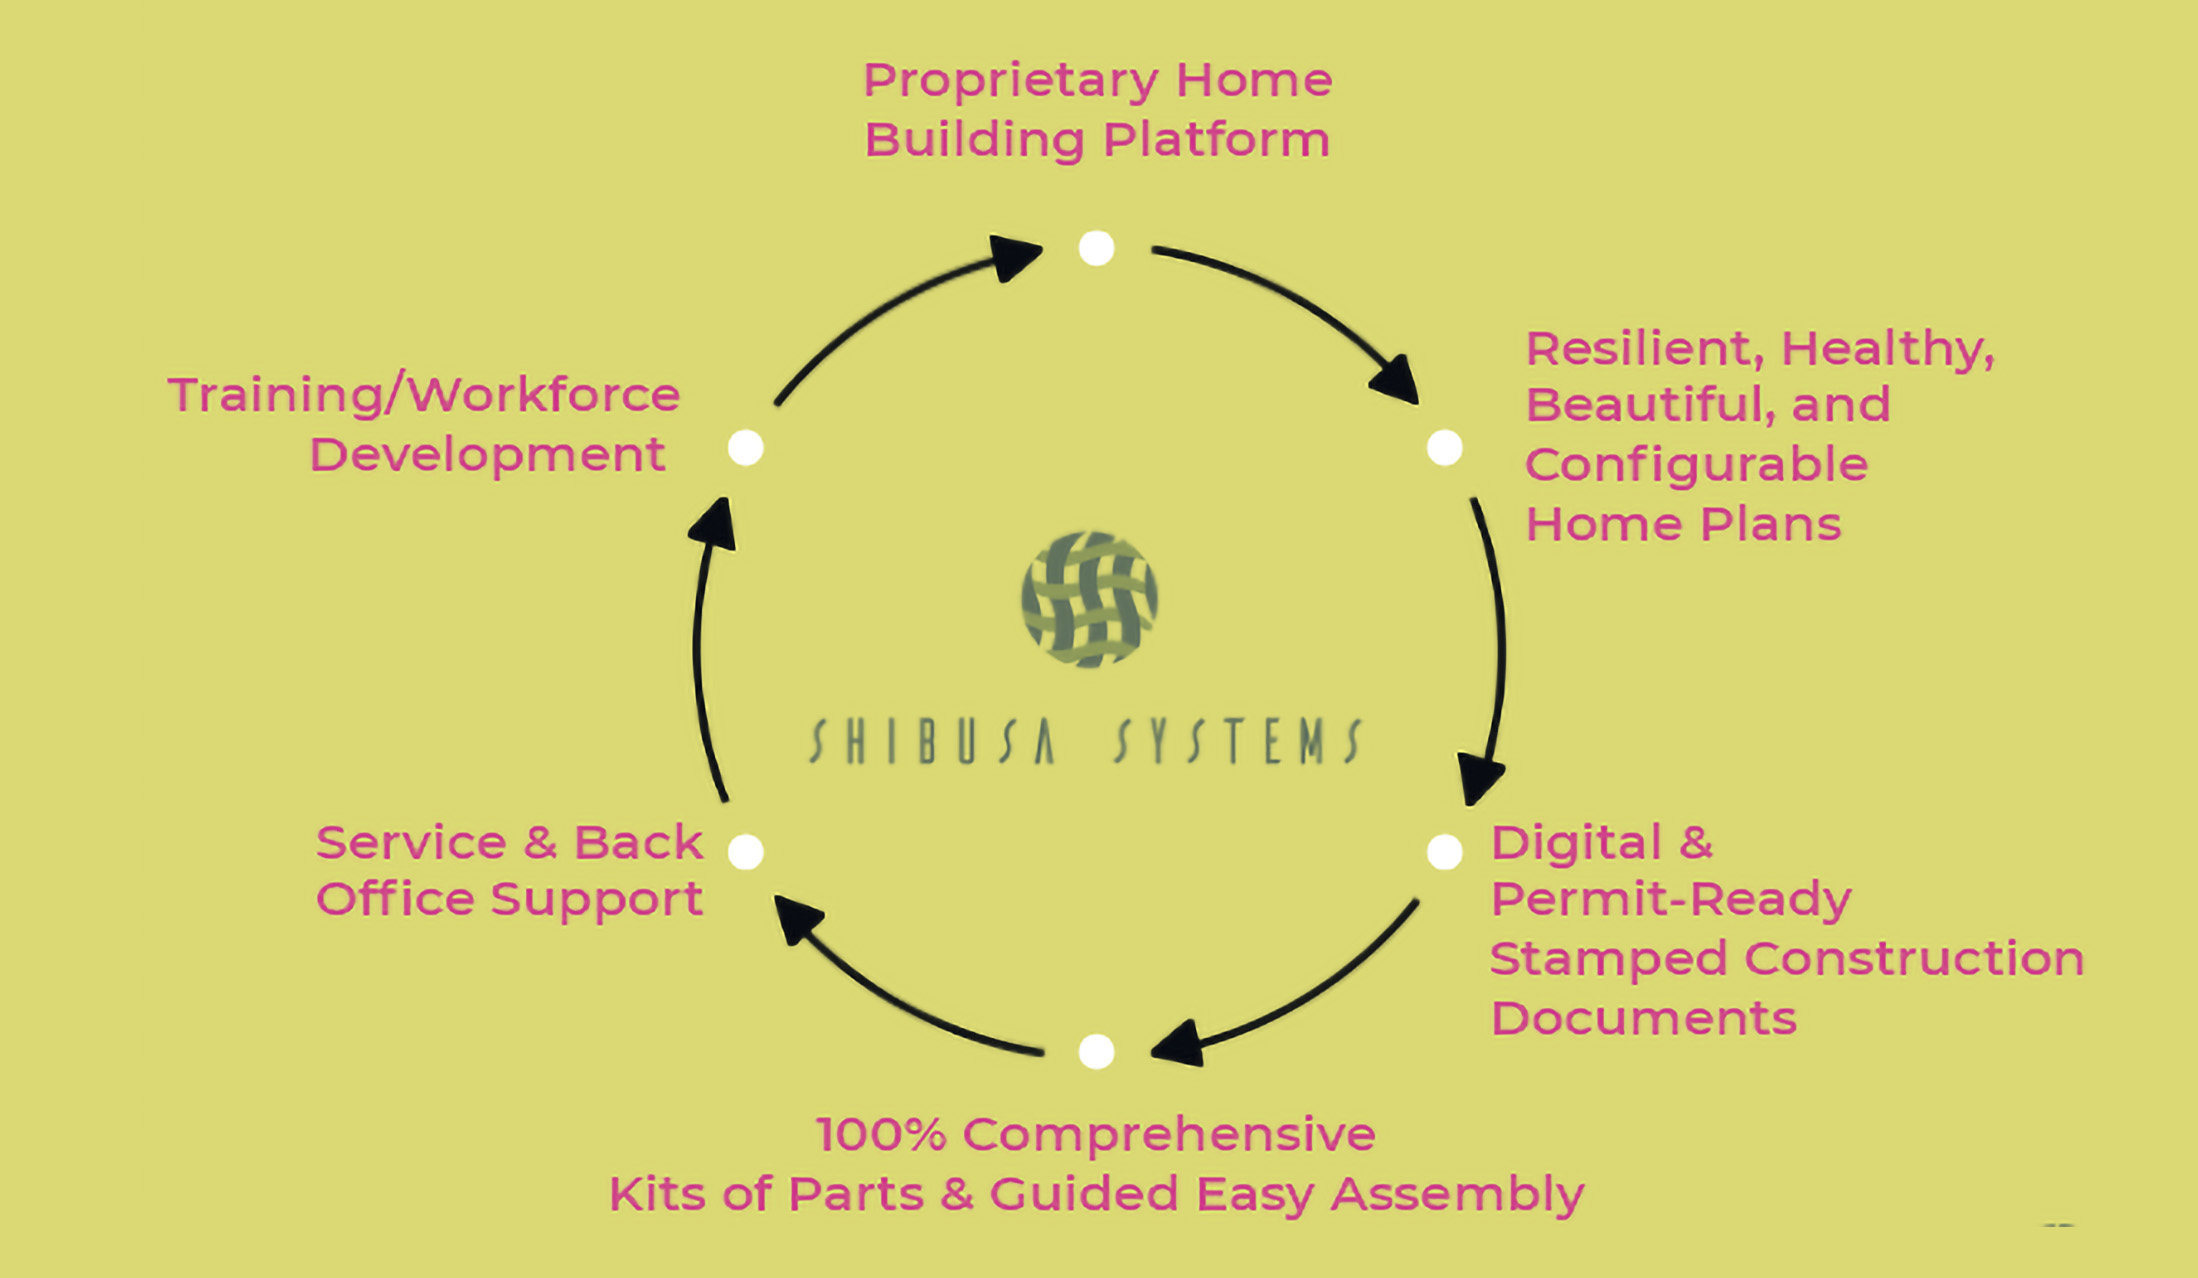 Shibusa Systems diagram